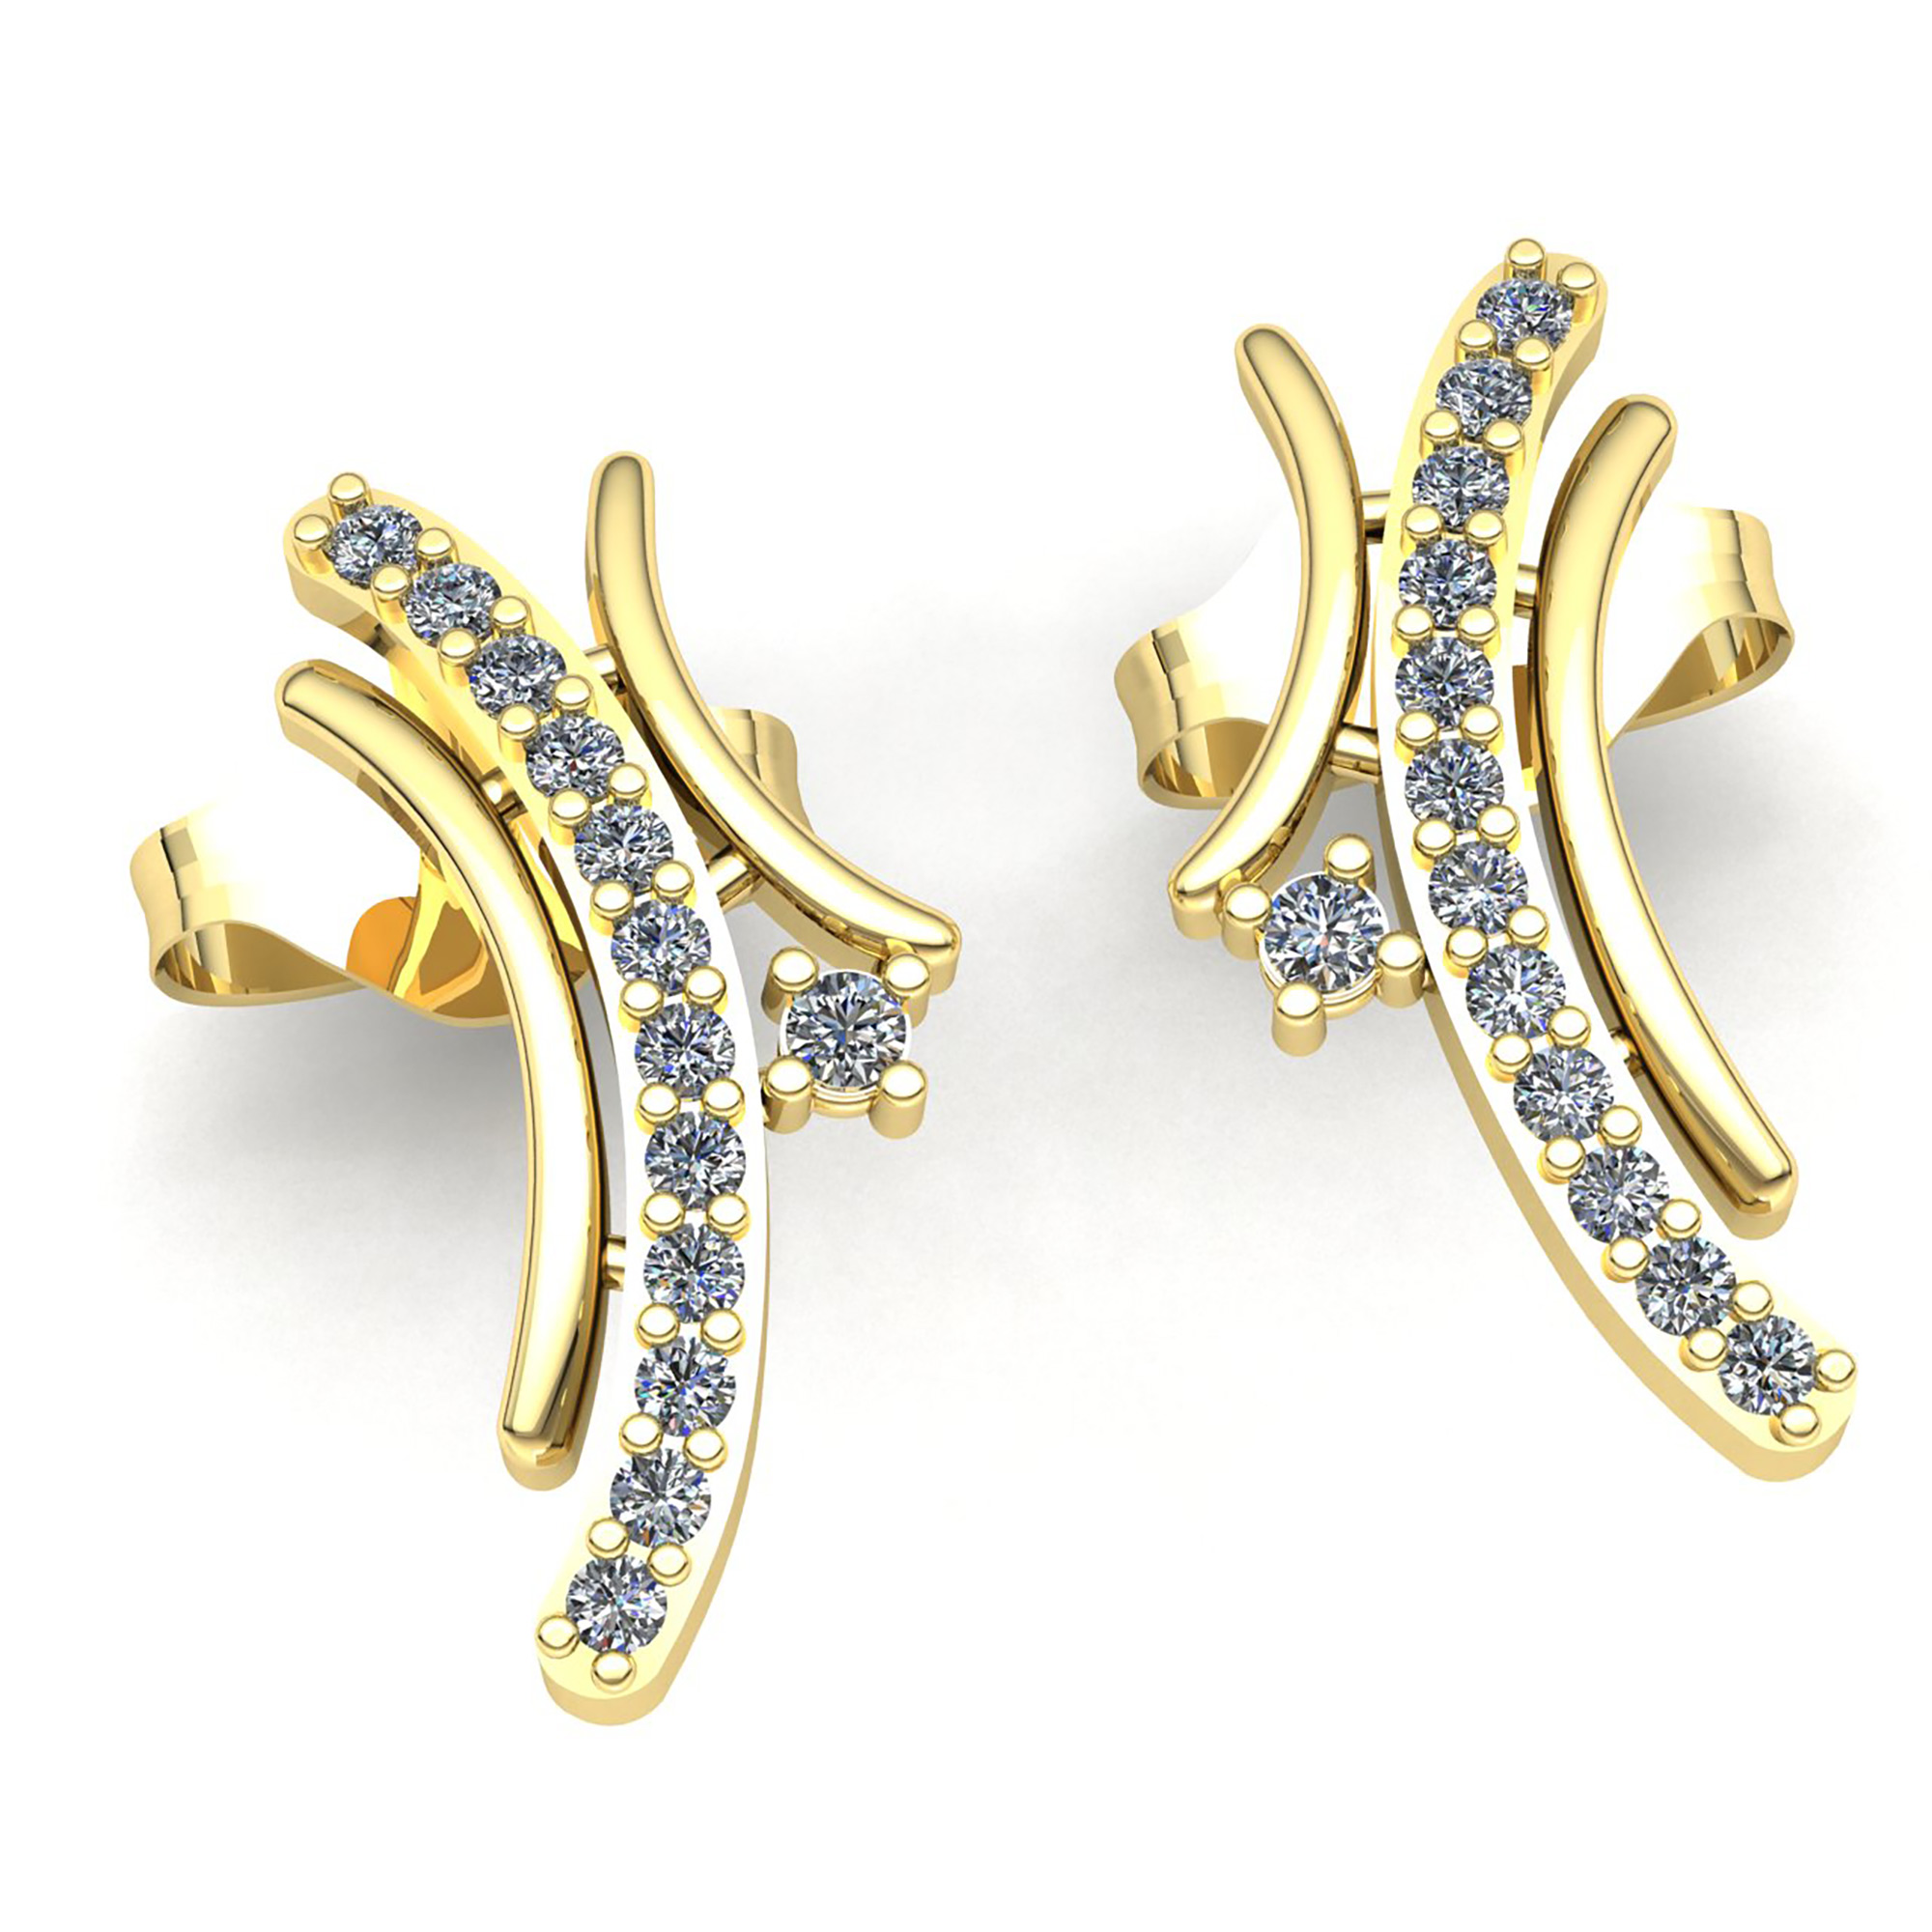 Jewel We Sell Genuine 3ctw Round Cut Diamond Women's Fancy Earrings 10K White, Yellow or Rose Gold J SI2